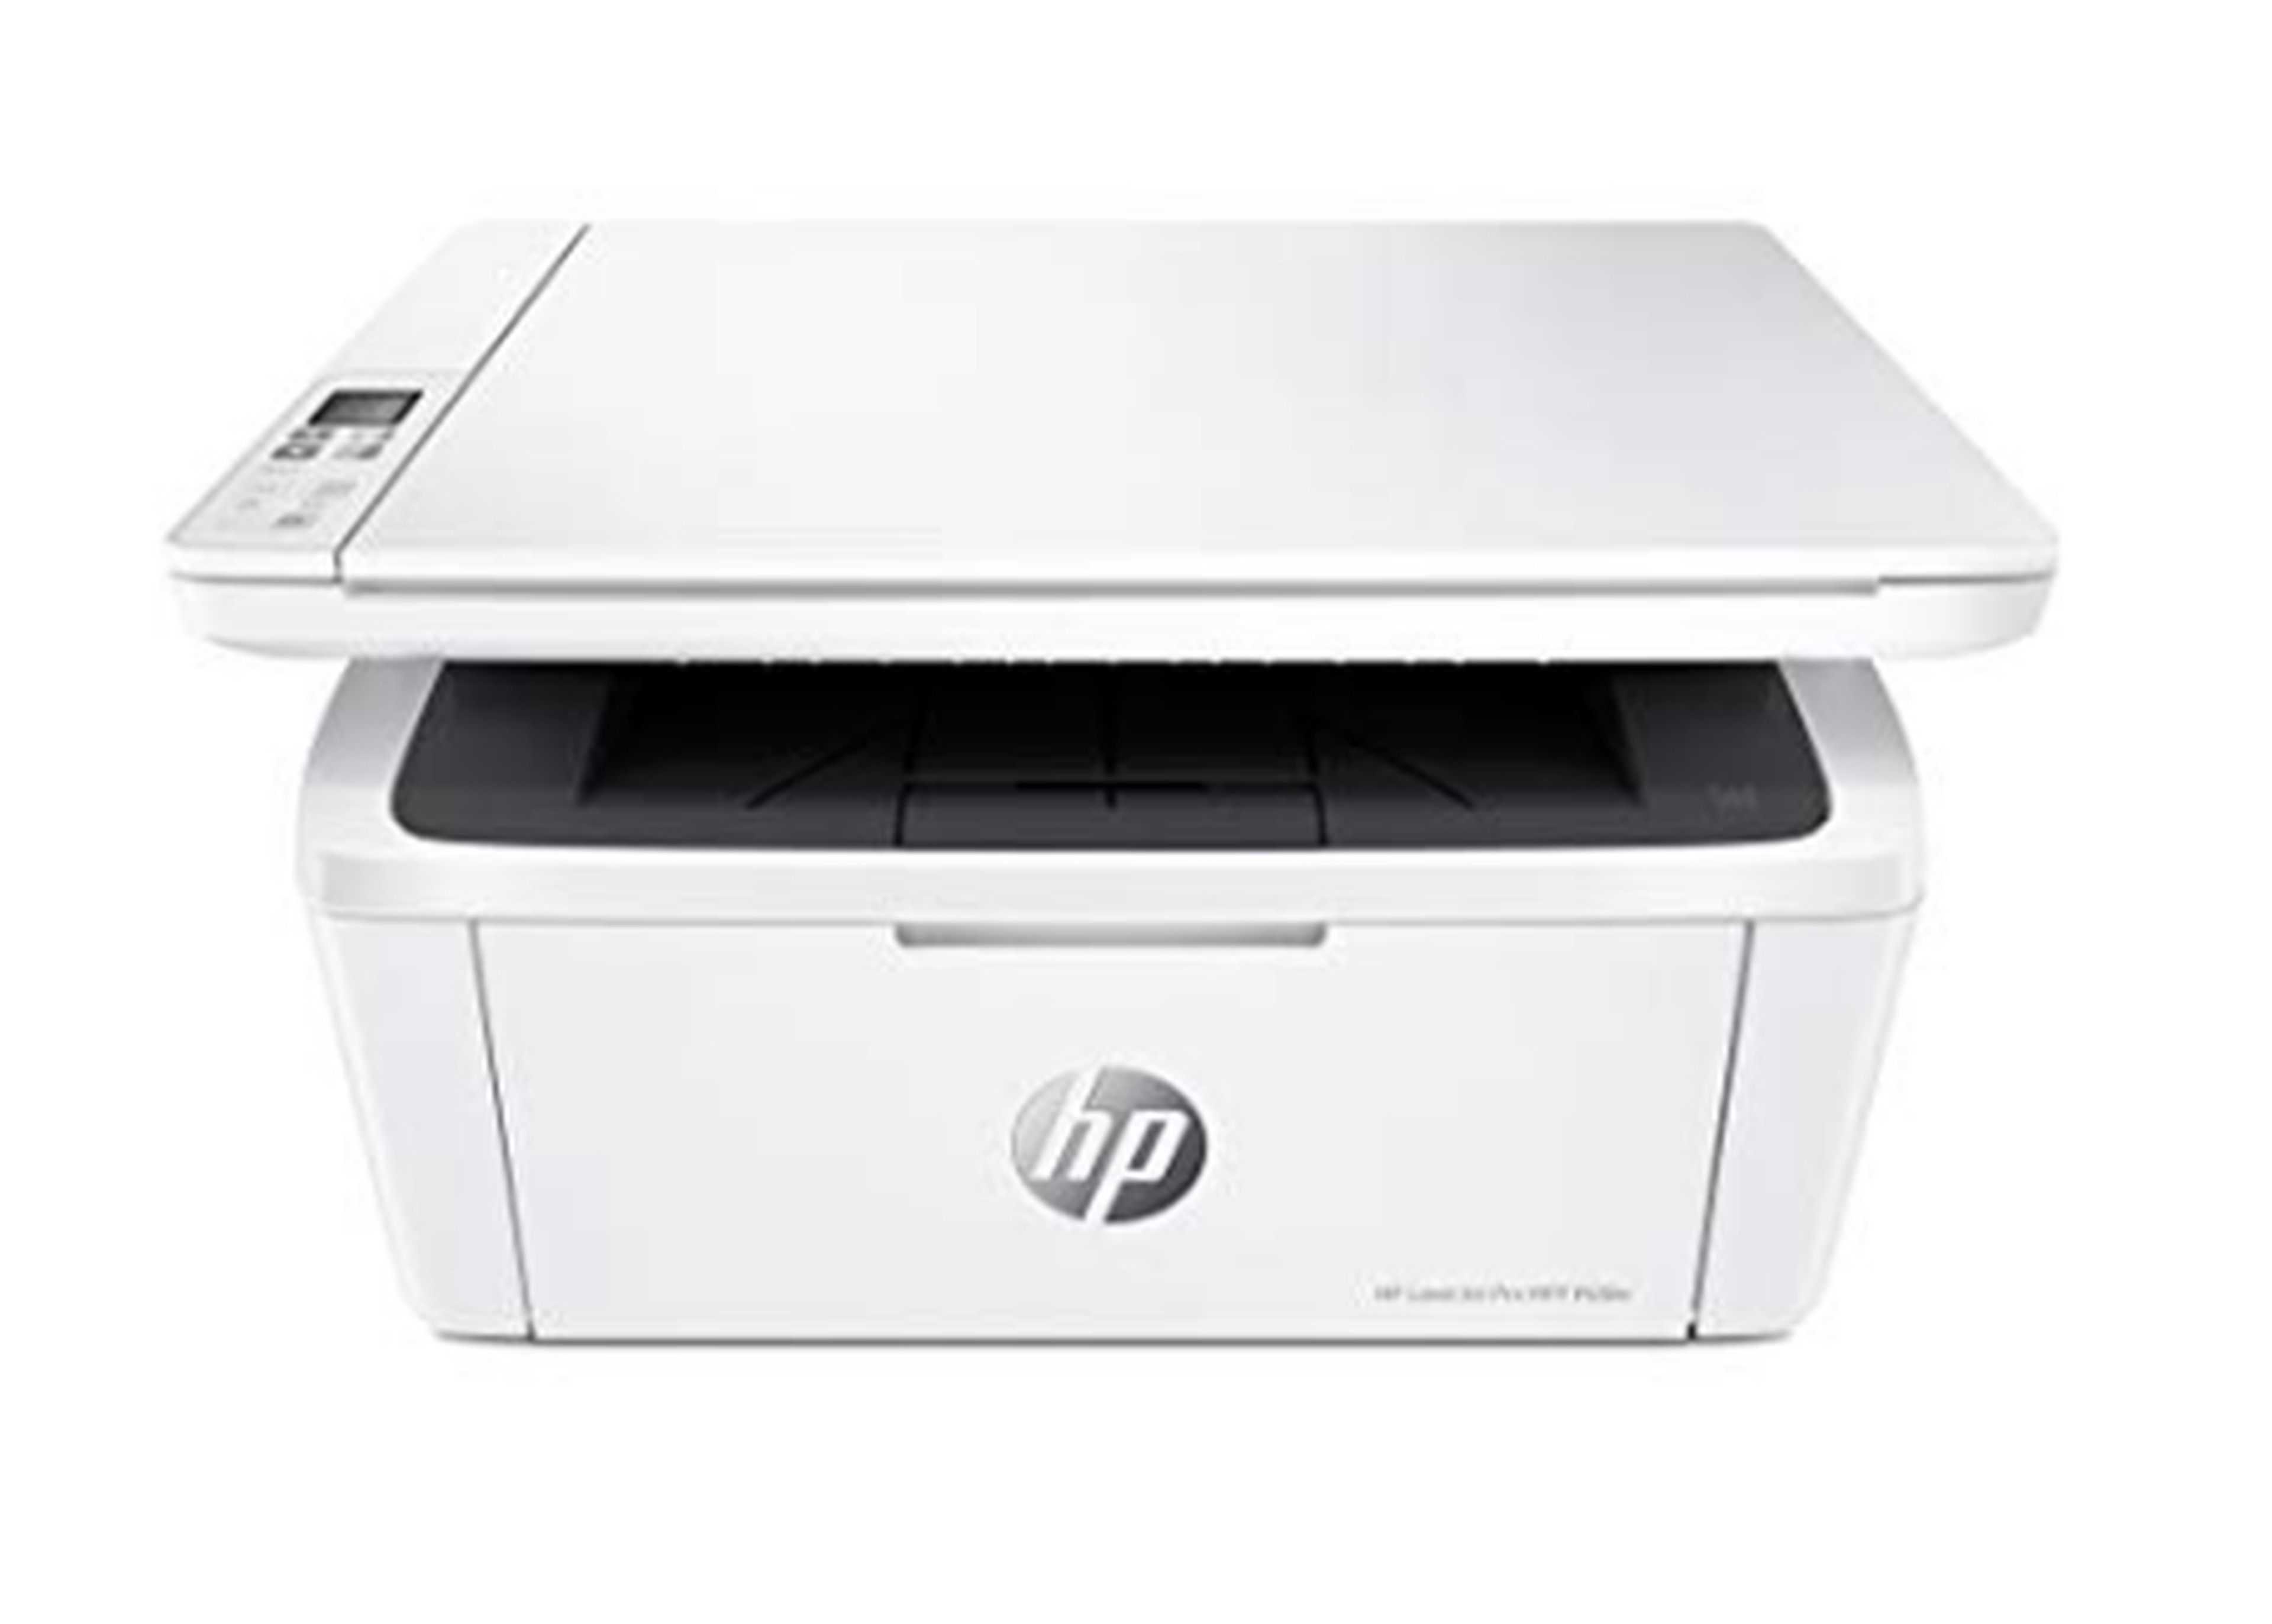 Impresora láser HP